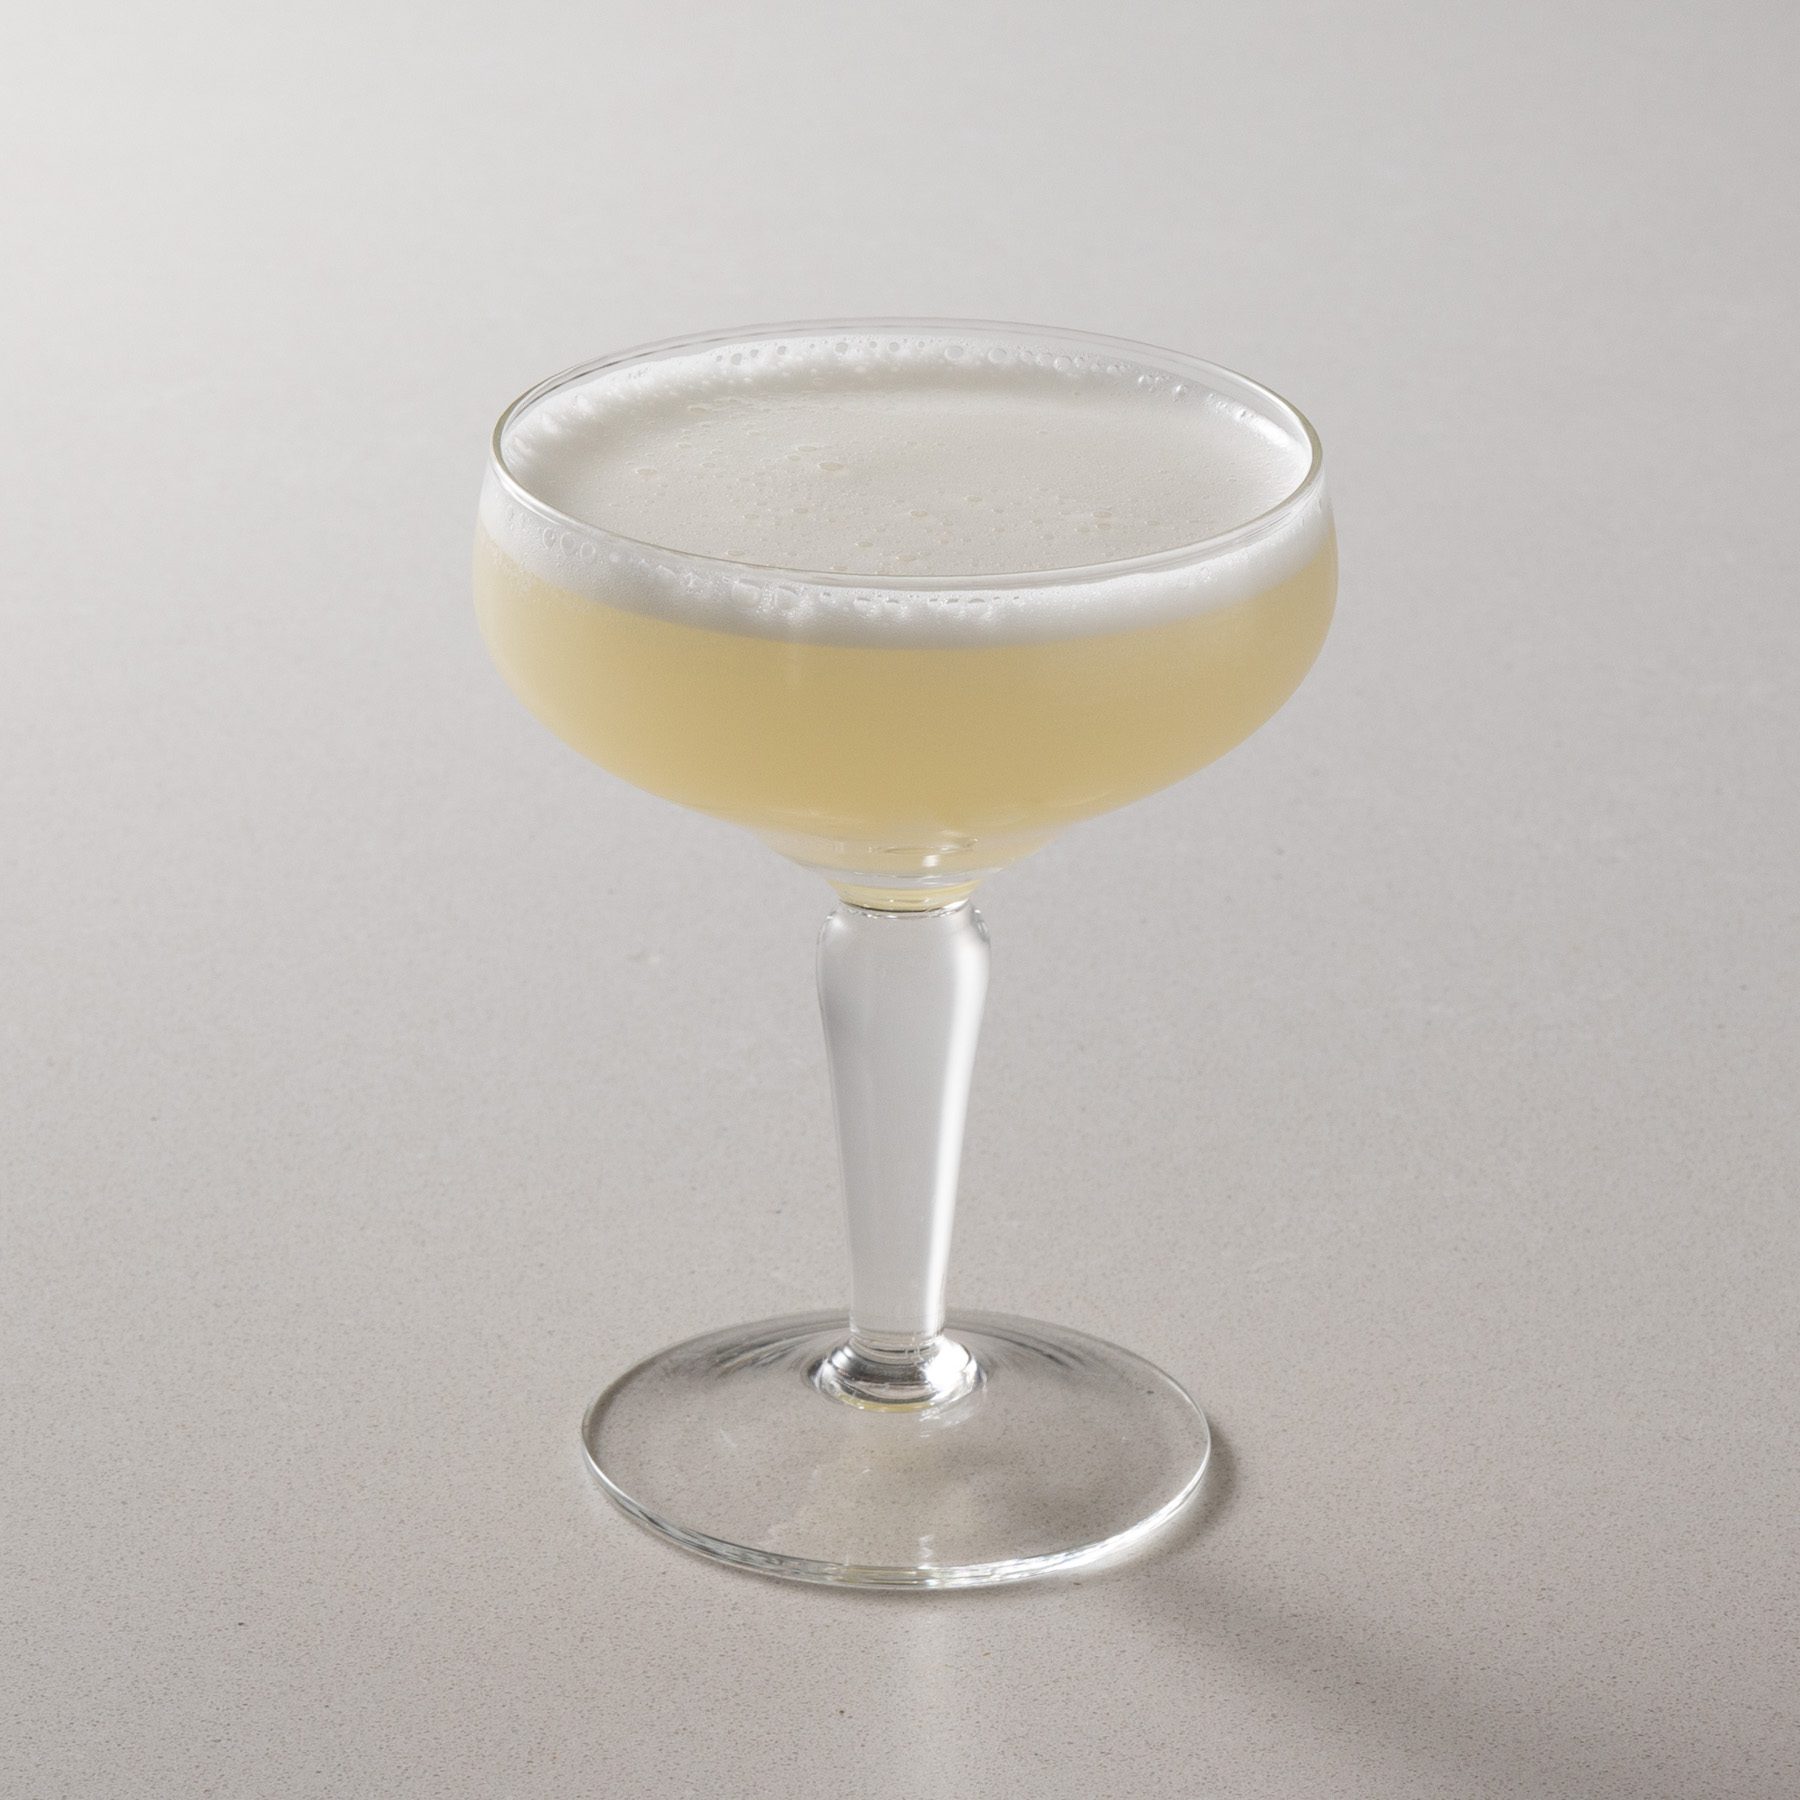 Hemingway Special cocktail